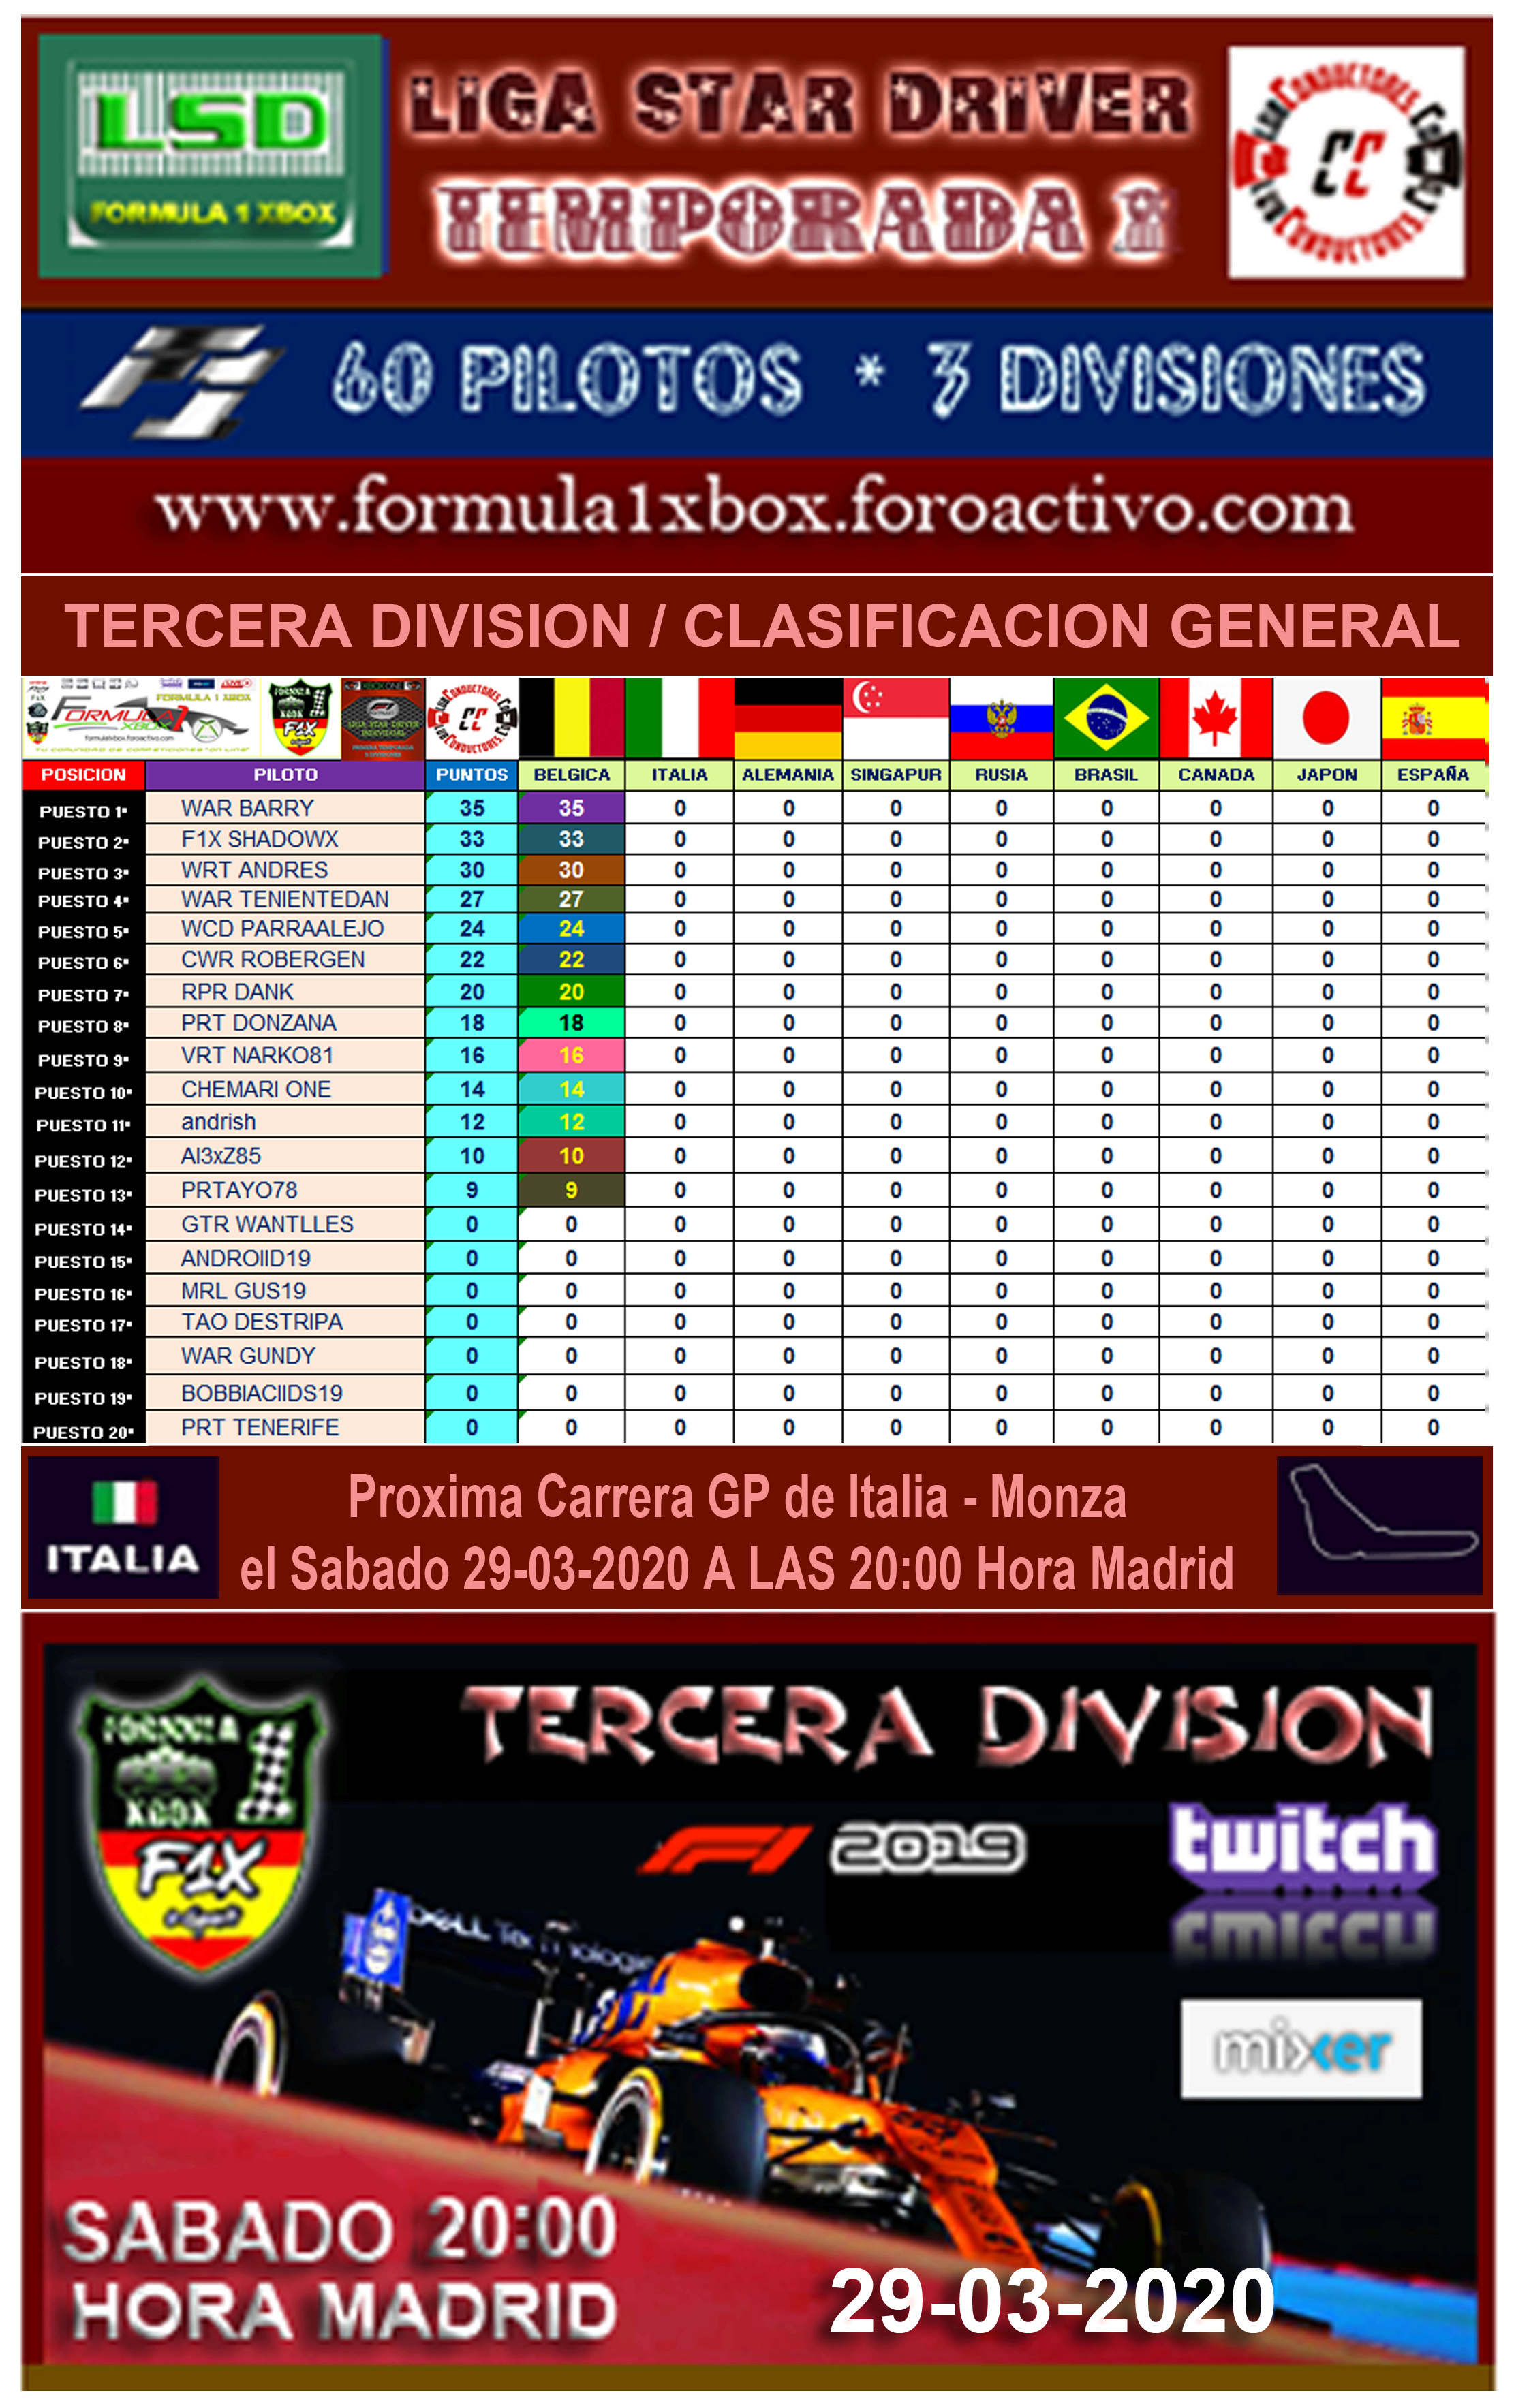 F1 2019 - XBOX ONE / LIGA STAR DRIVER I * INDIVIDUAL / CLASIFICACION GENERAL /  RESULTADOS RACE 1 - BELGICA / DIVISION 3. Tercer10